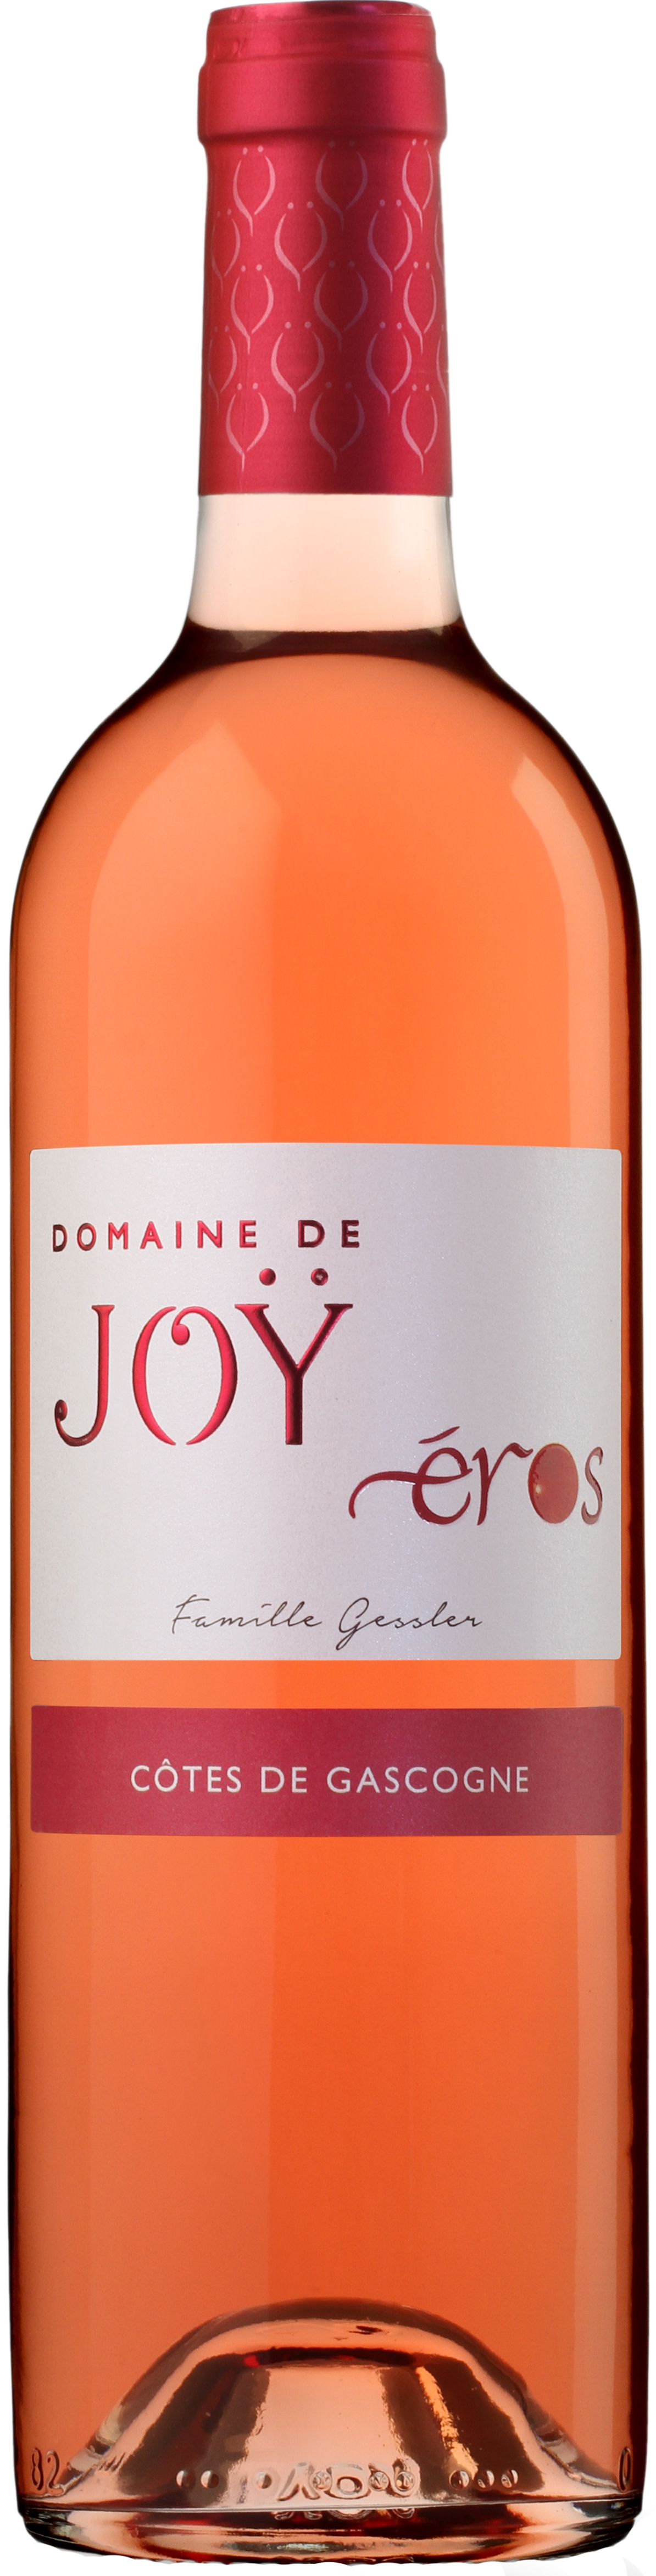 Domaine De Joy, Eros, 2016